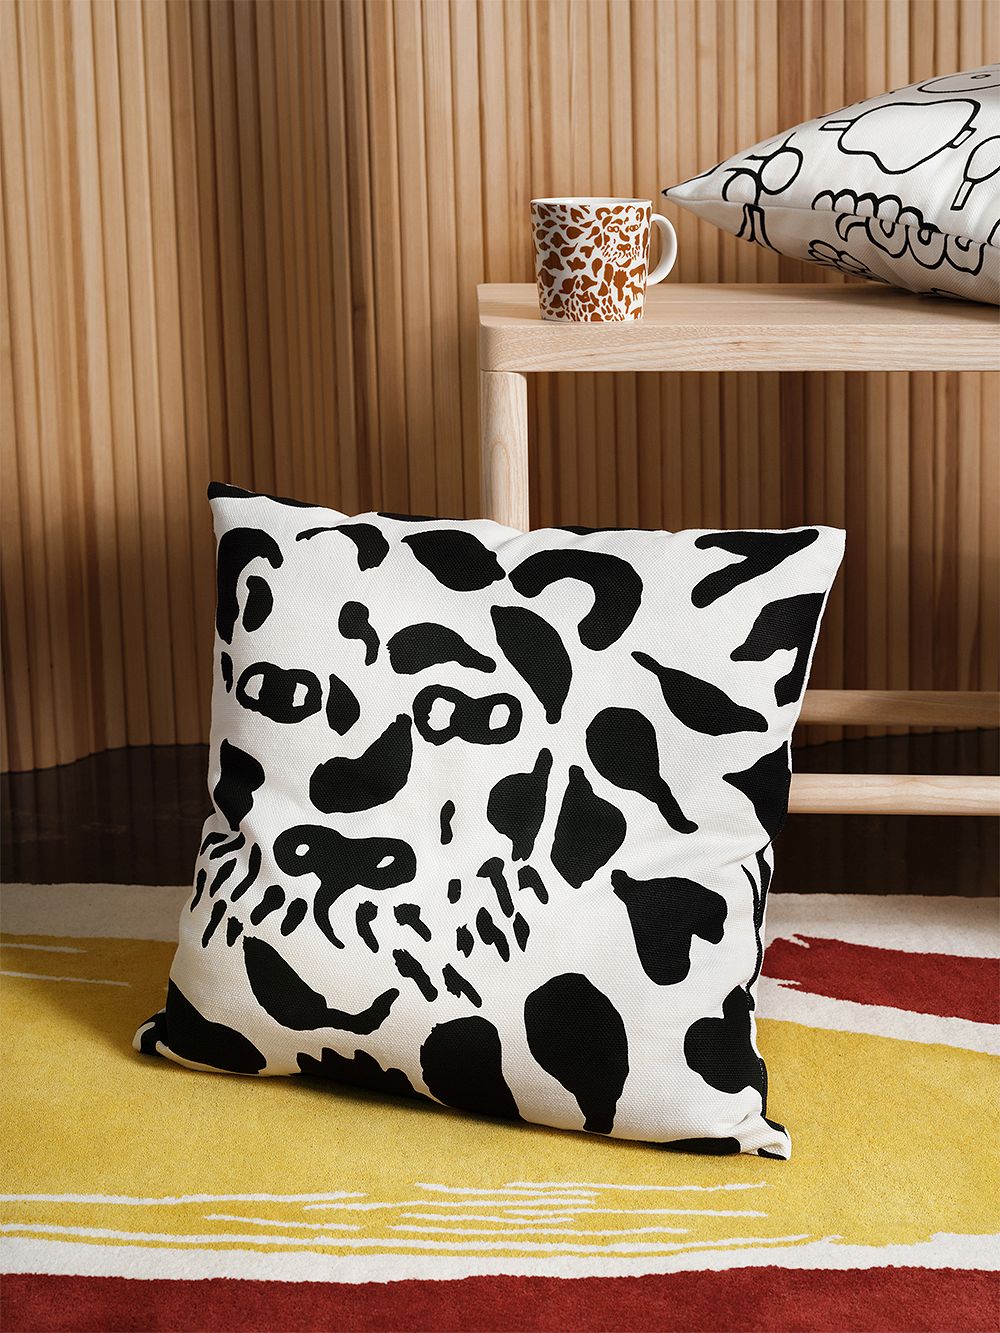 Iittala Cheetah cushion cover